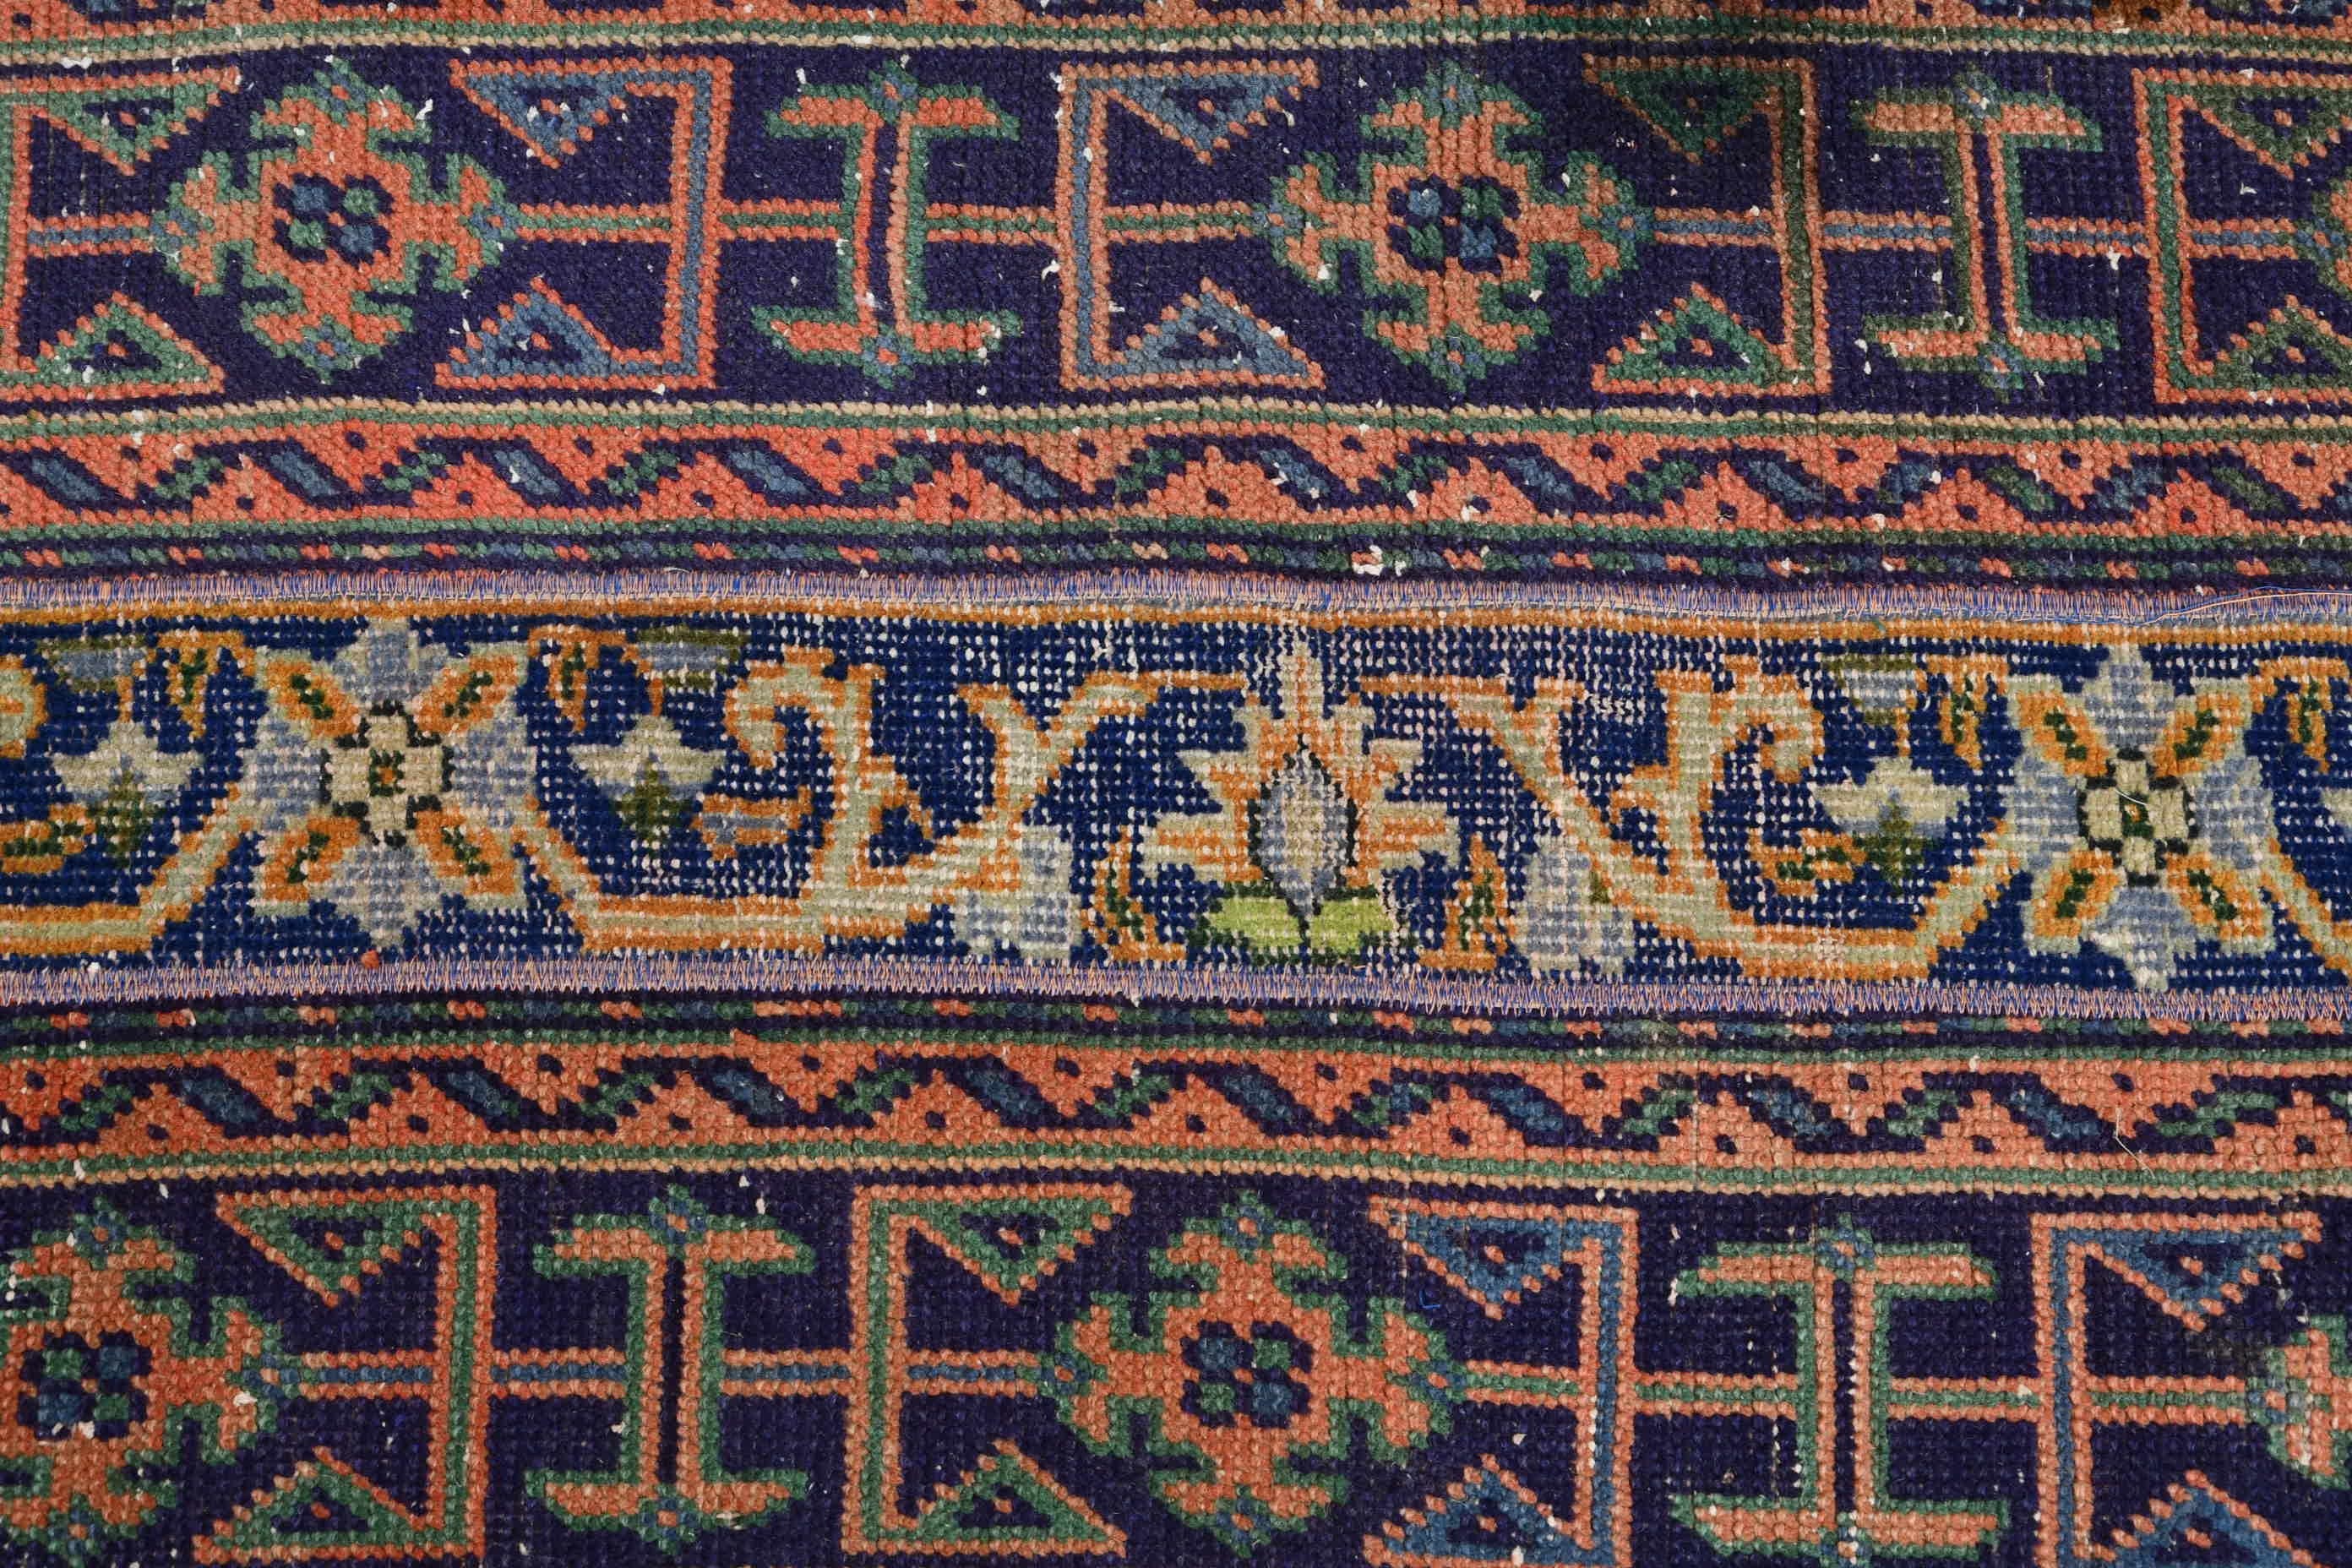 Turkish Rug, Oriental Rug, Vintage Rug, Old Rug, Car Mat Rugs, Moroccan Rugs, Blue Wool Rug, Wall Hanging Rug, 2.1x4.6 ft Small Rugs